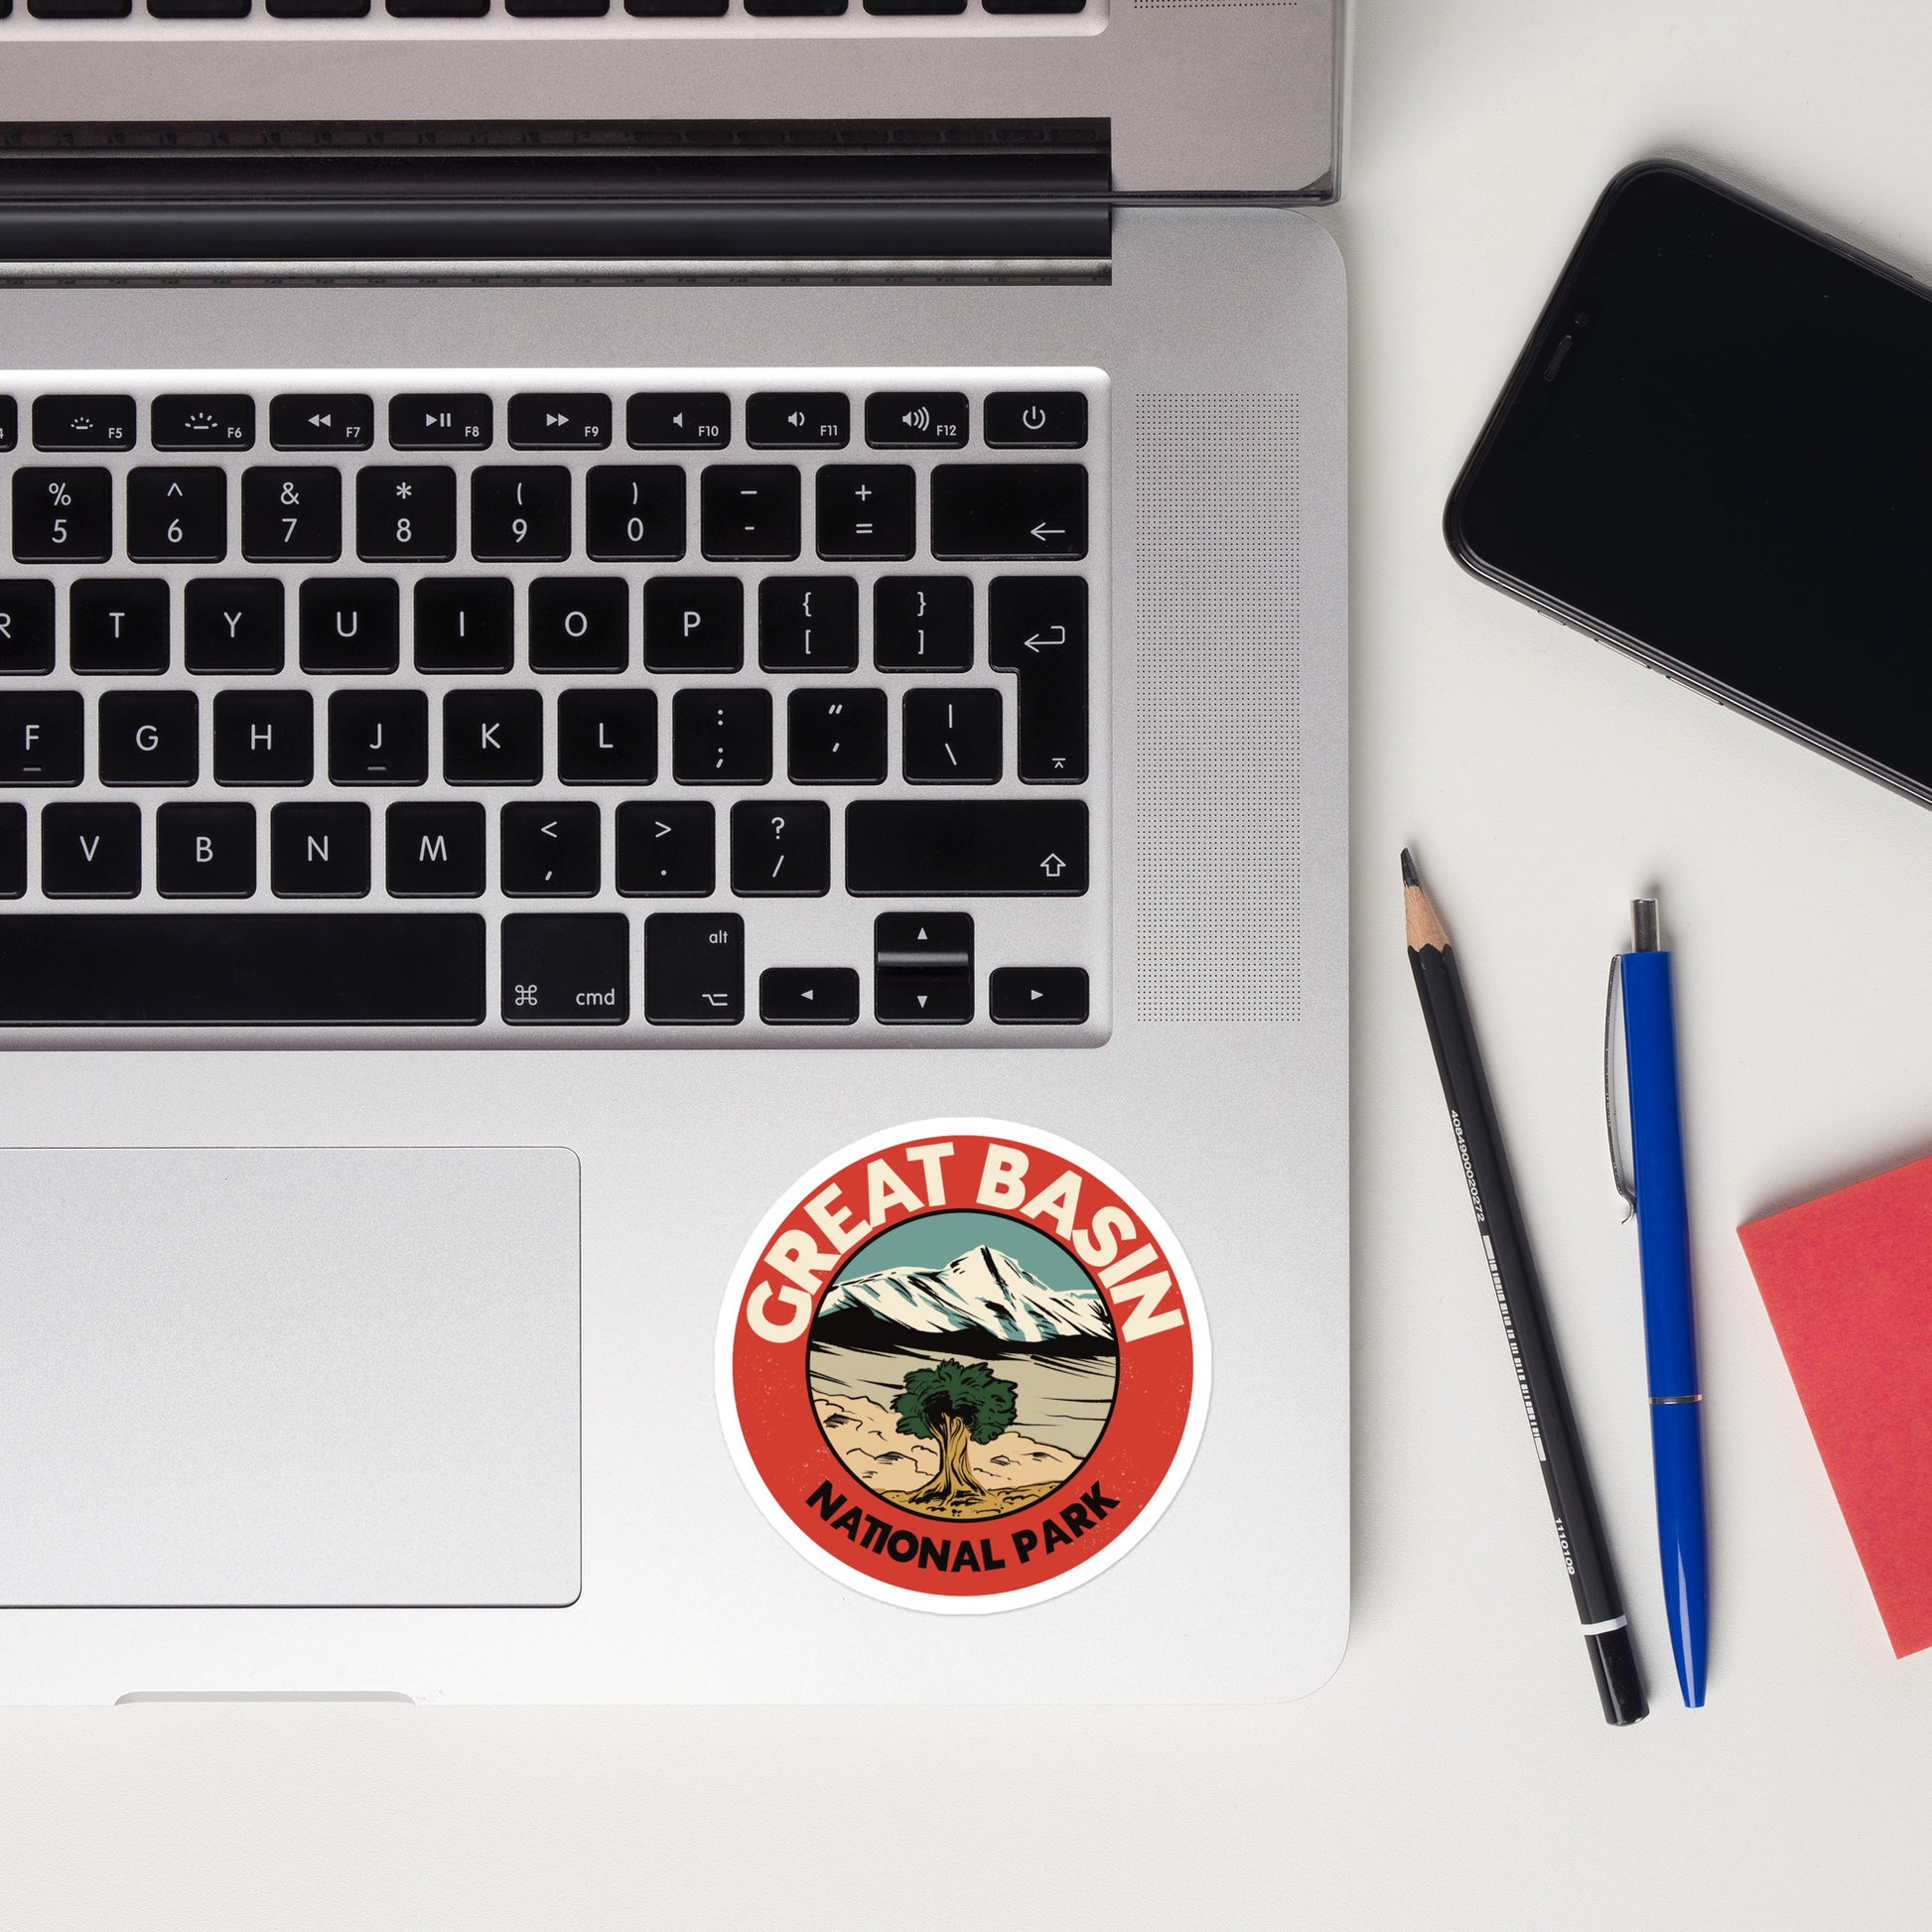 A sticker of Great Basin National Park on a laptop